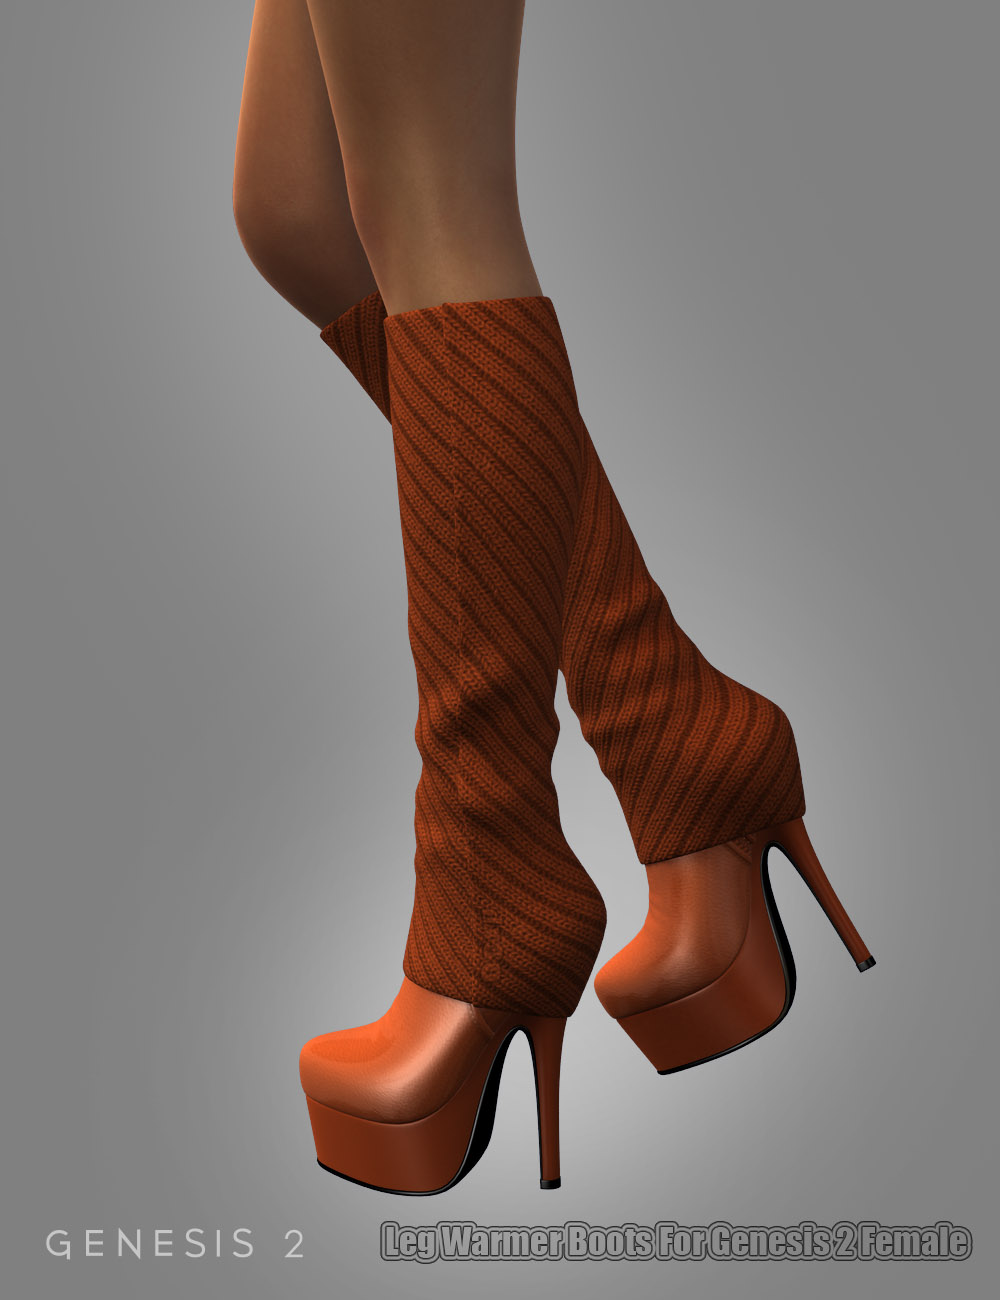 Leg Warmer Boots For Genesis 2 Female(s) by: dx30, 3D Models by Daz 3D